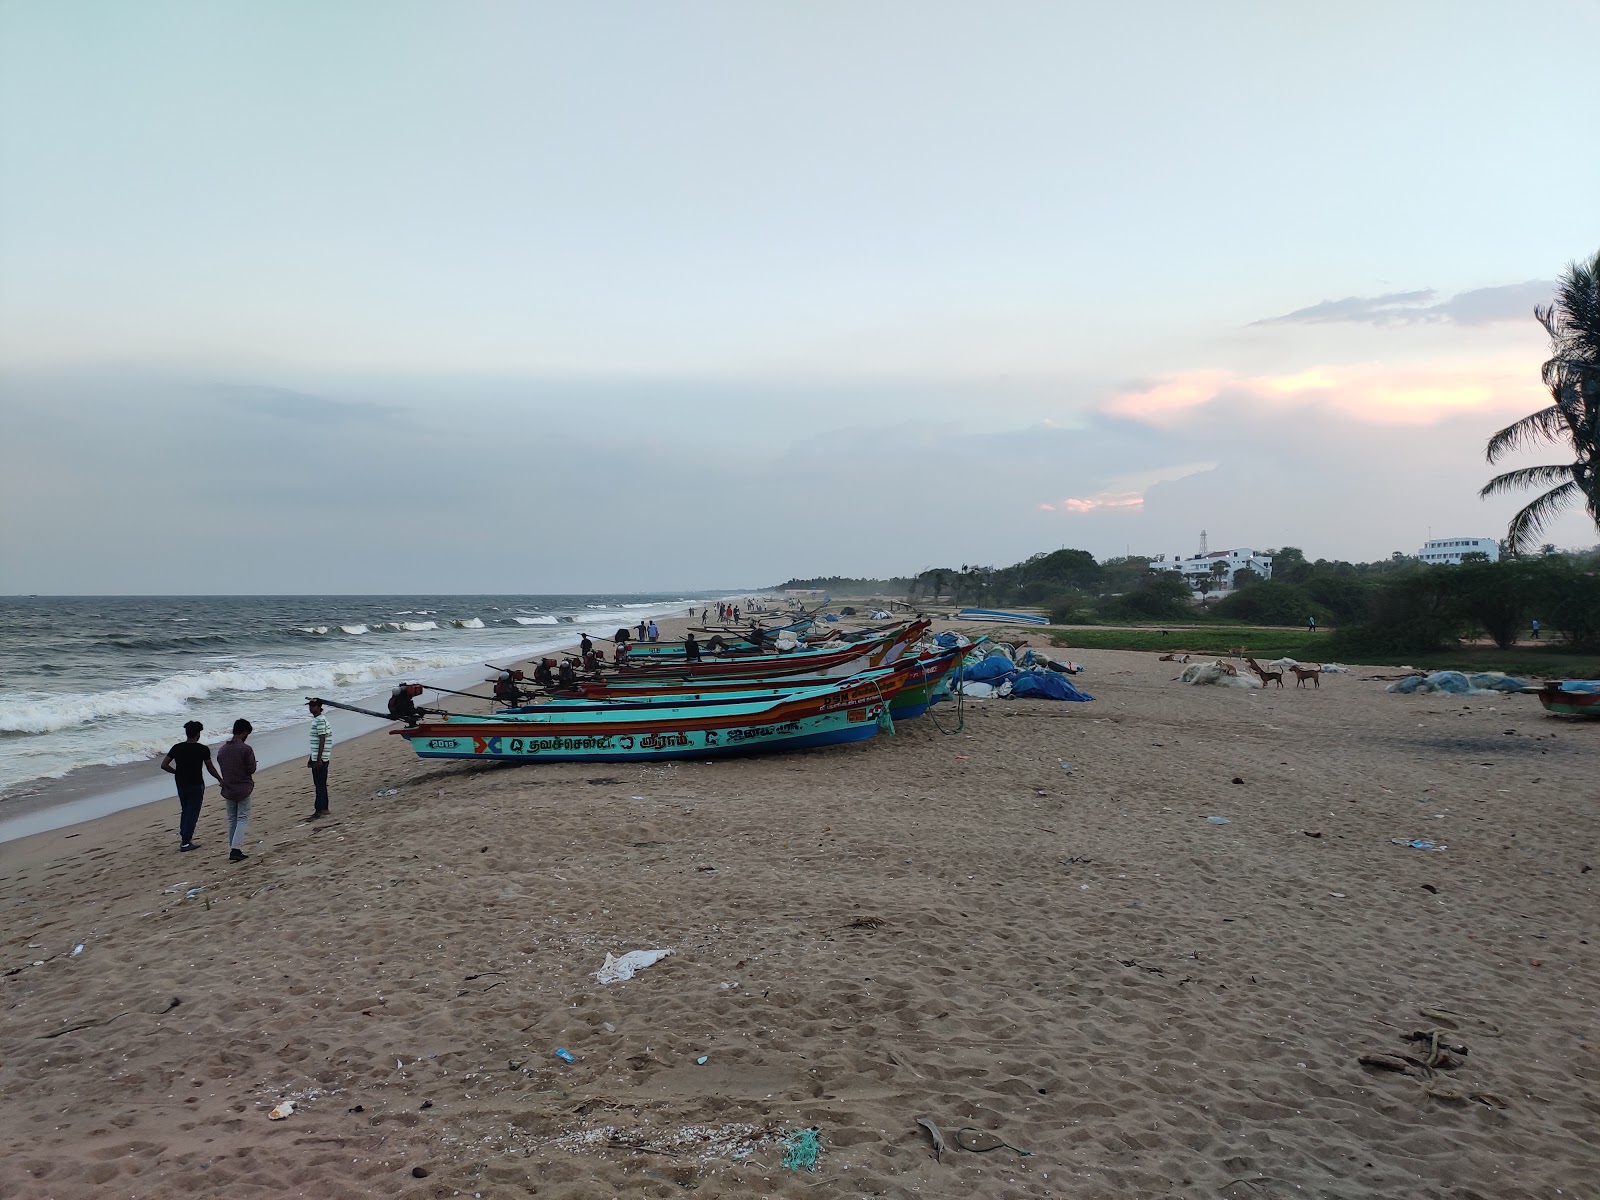 Fotografie cu Pondicherry University Beach cu nivelul de curățenie in medie